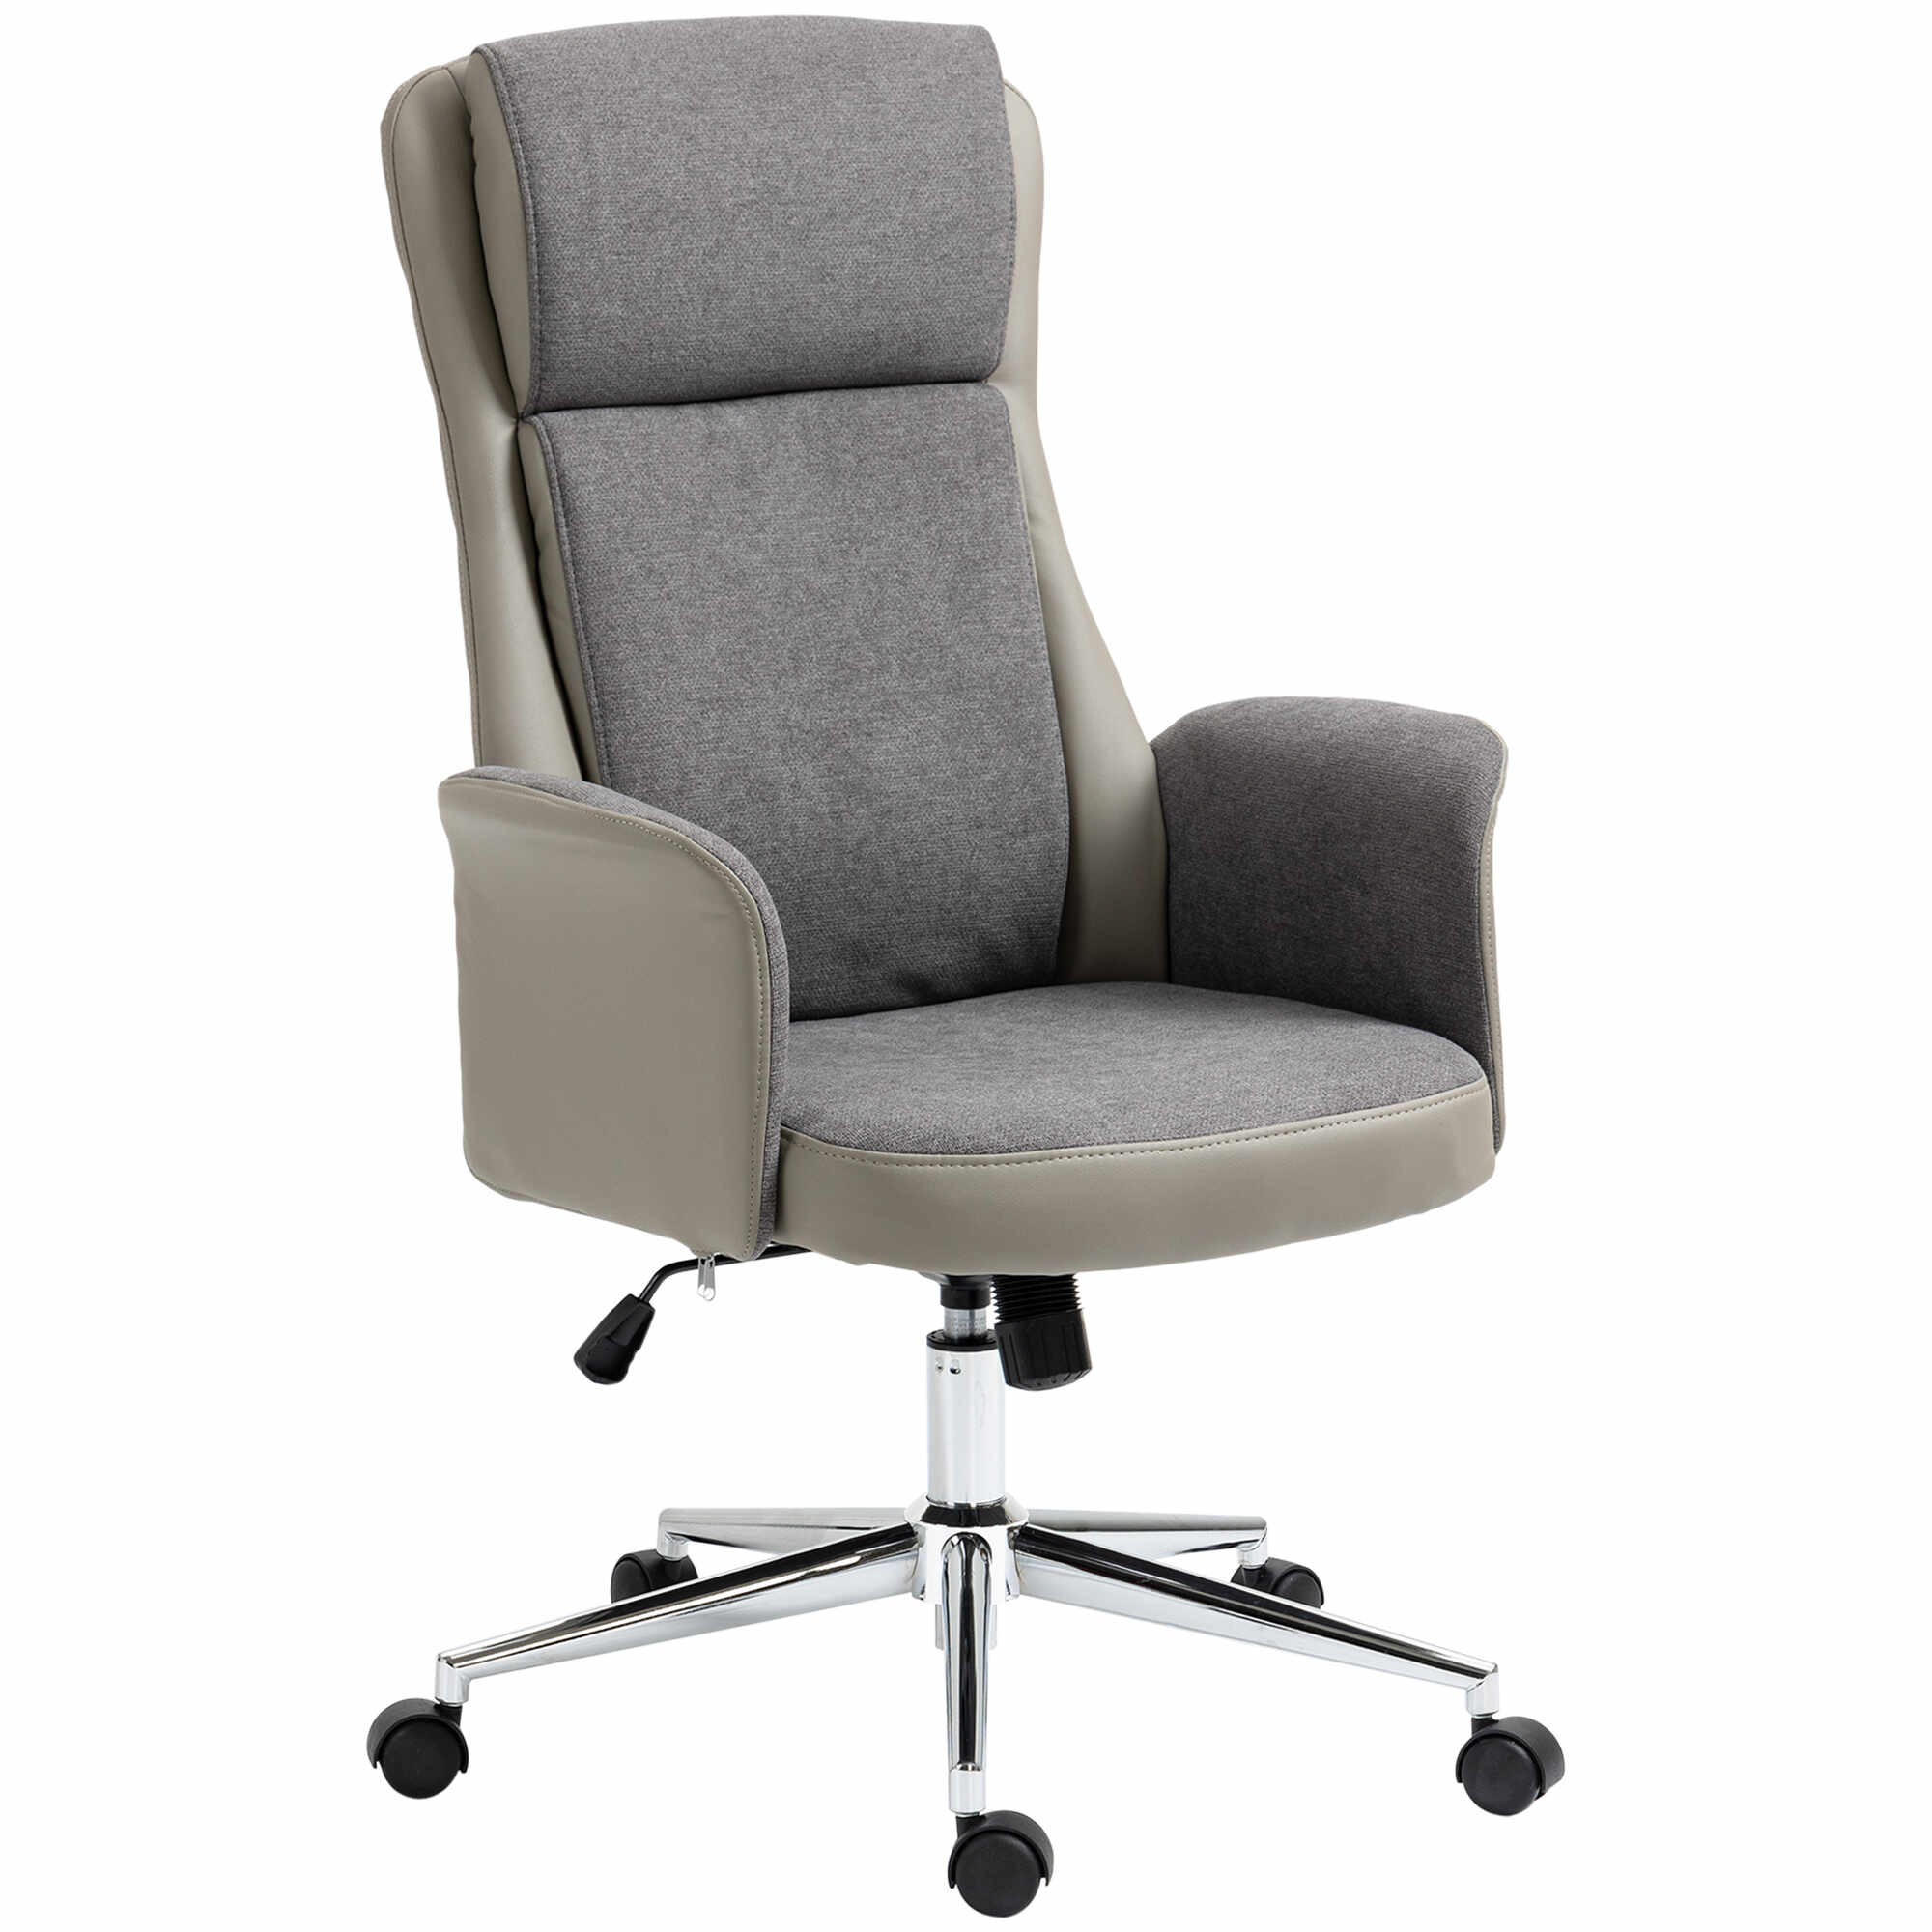 Scaun de birou elegant Vinsetto din 2 tesaturi, scaun ergonomic reglabil pe inaltime cu roti pivotante, 65x72x108-118cm, gri | Aosom RO